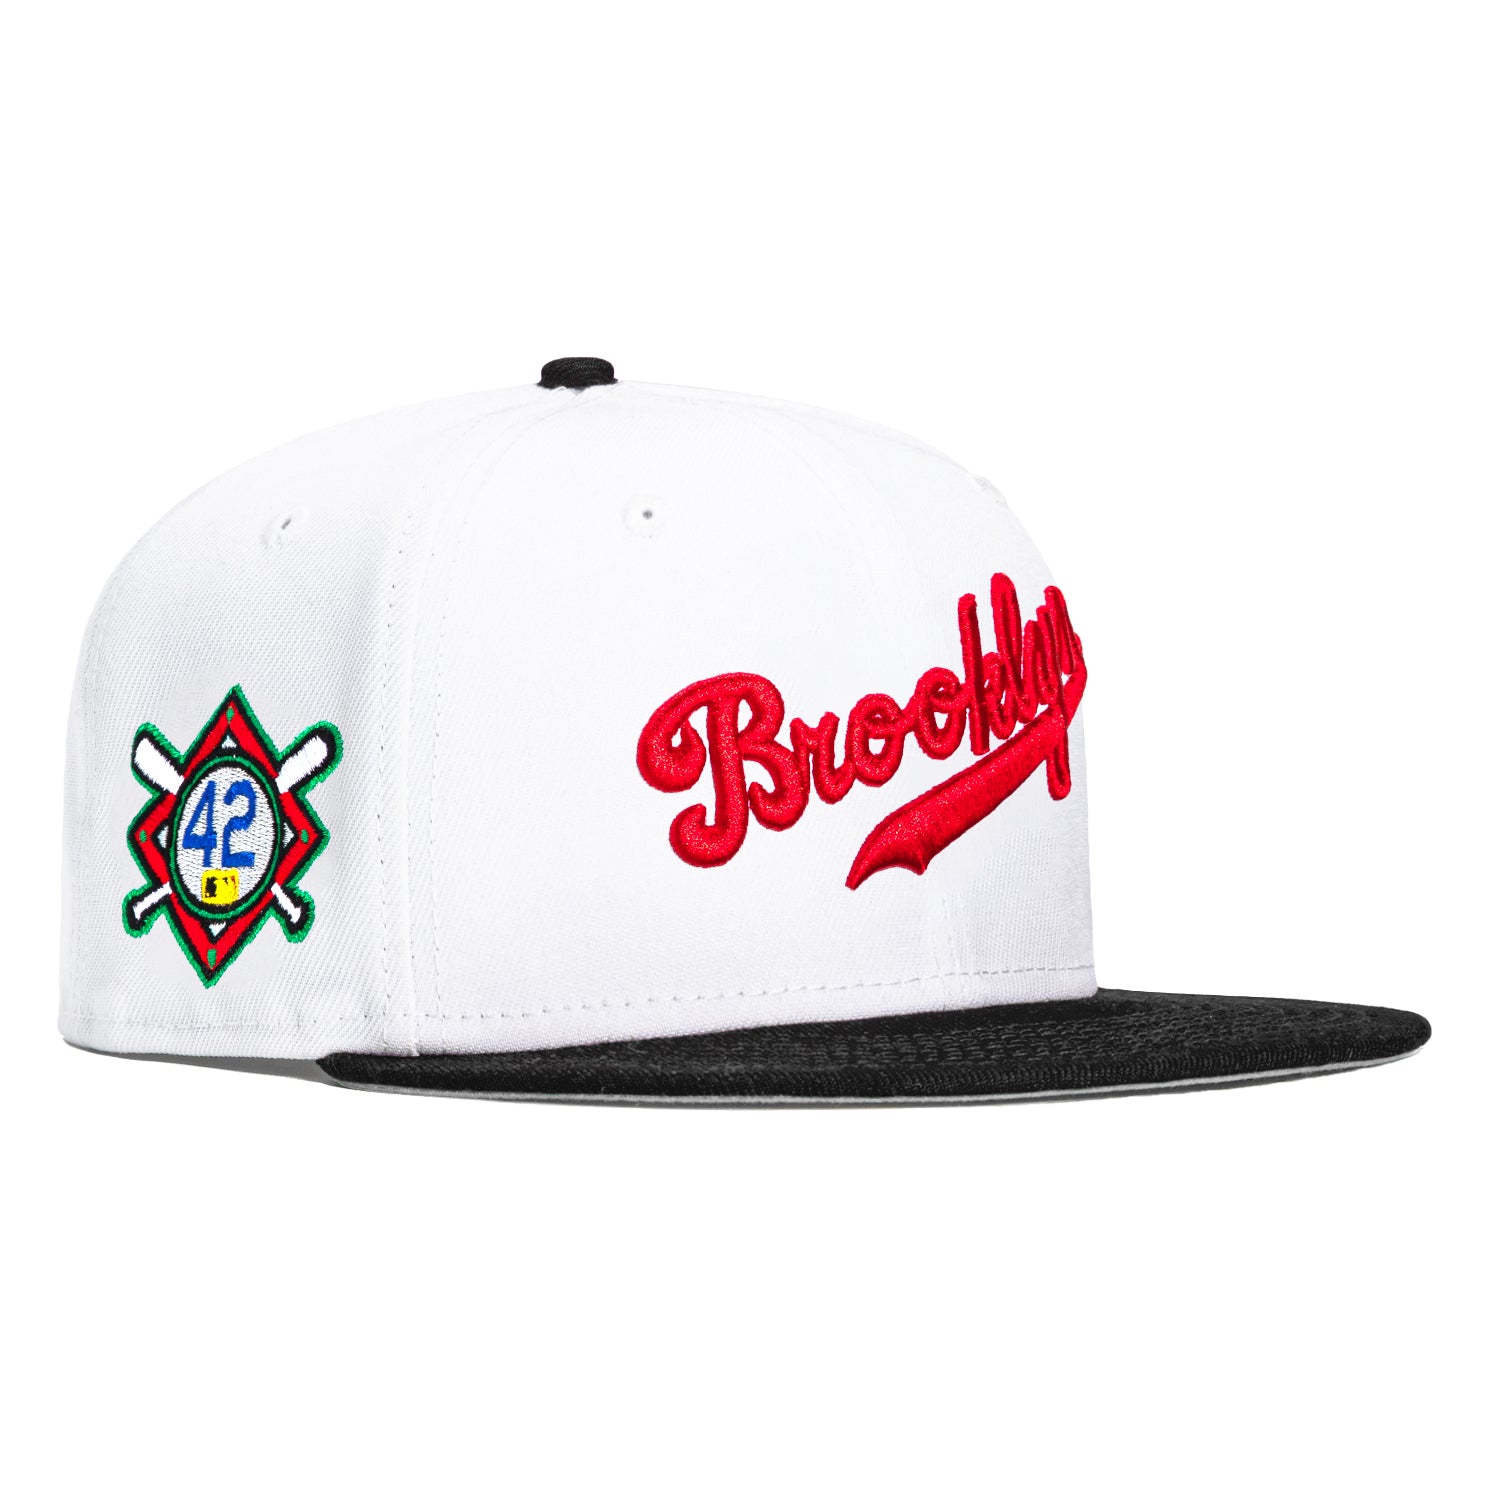 New Era 59Fifty Spike Brooklyn Dodgers 42 Patch Hat - White, Black